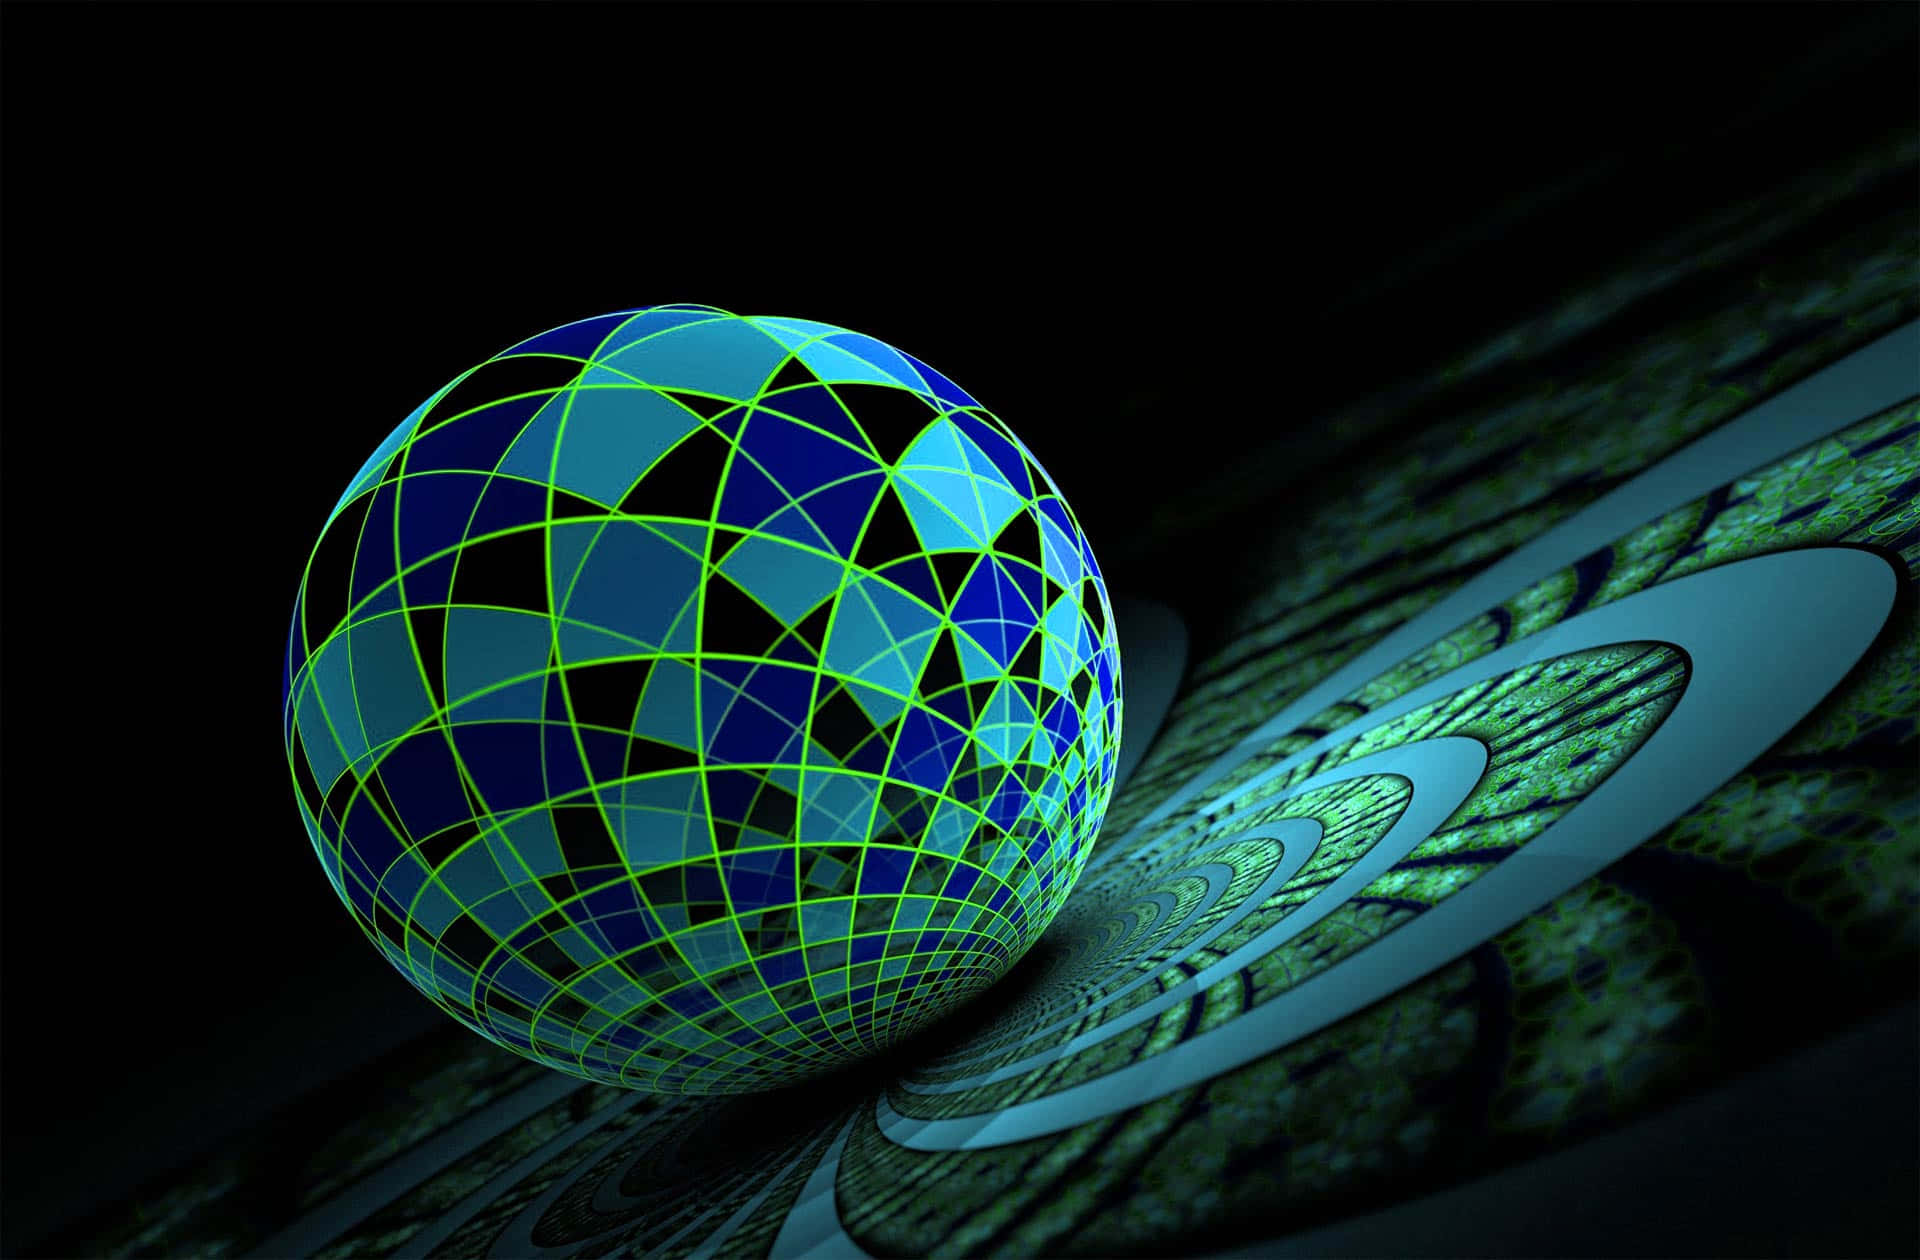 3d Sphere With Geometric Patterns Fondos De Pantalla Wallpaper